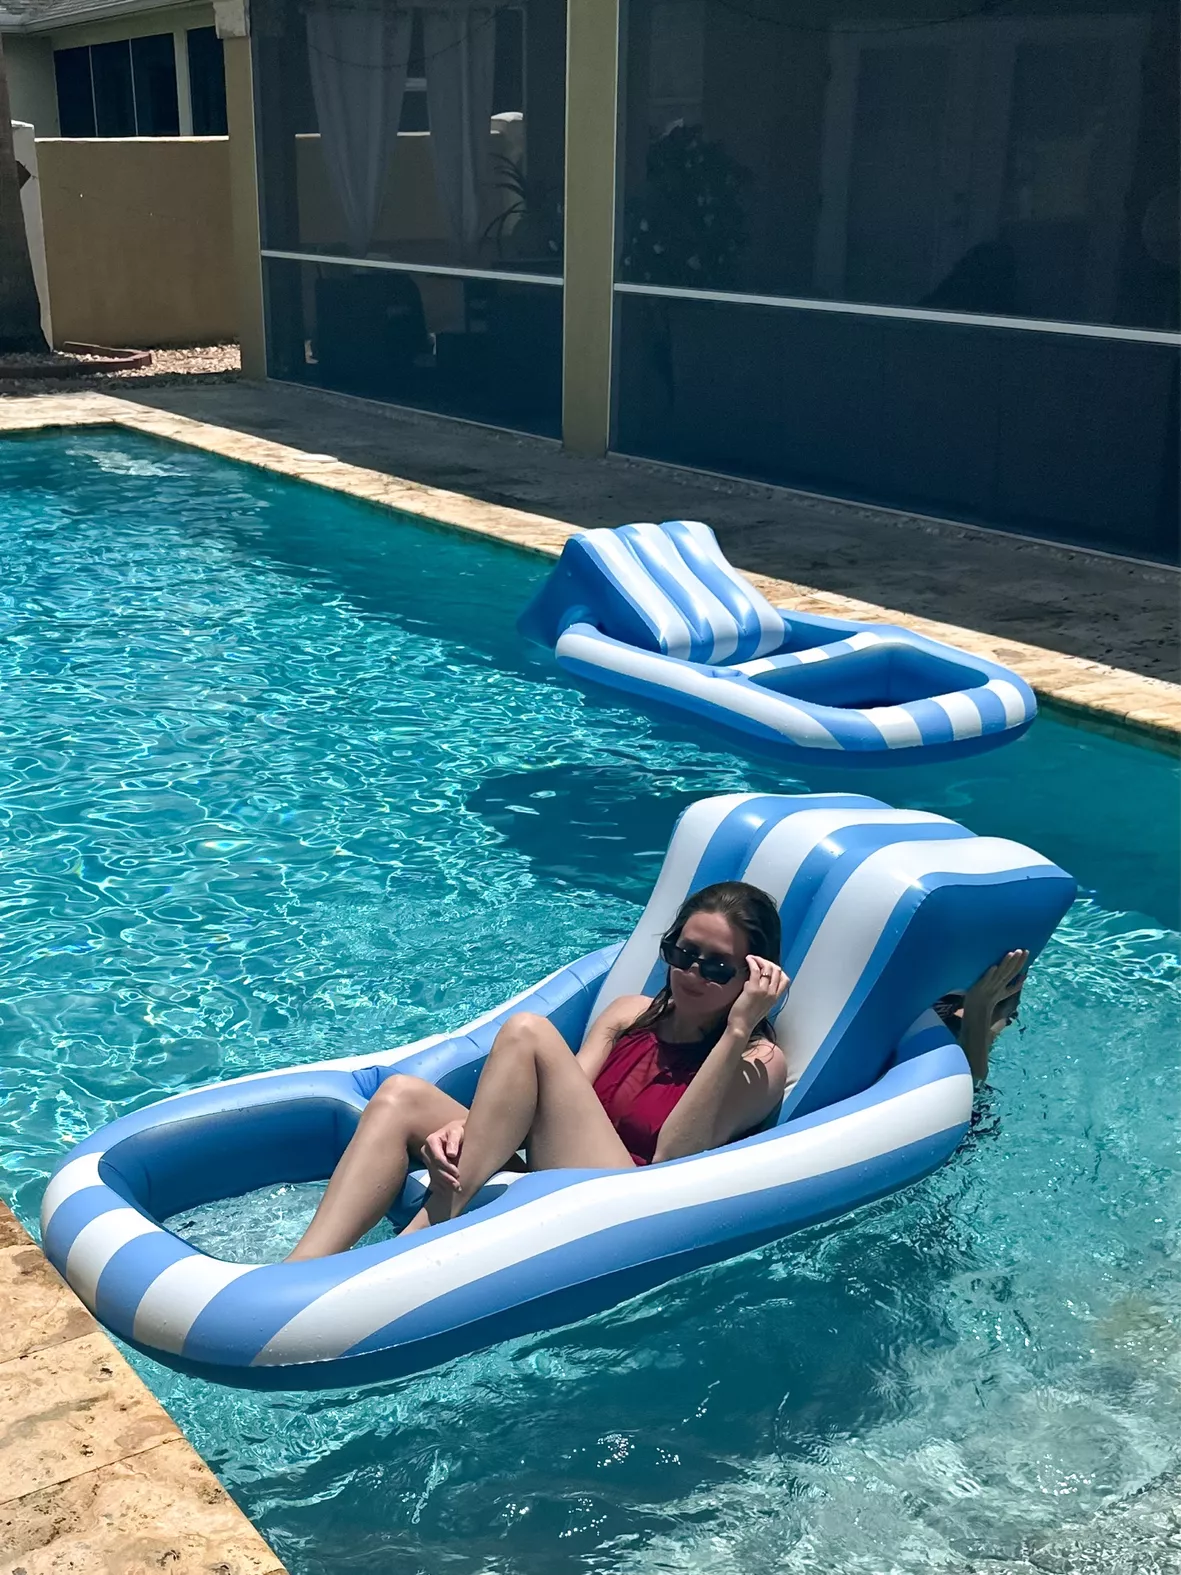 SKBANRU Pool Floats Adult Size, … curated on LTK